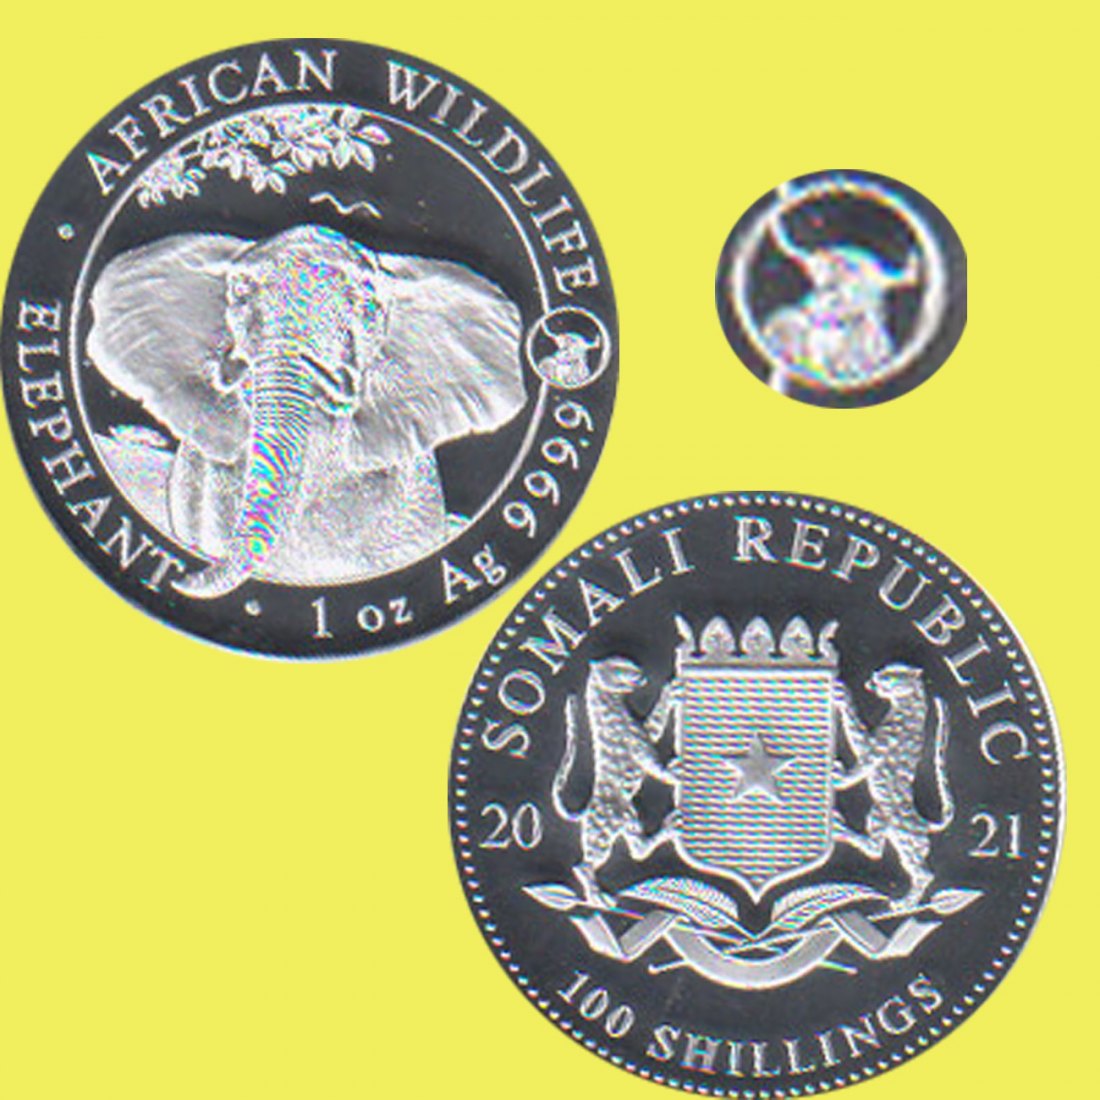  Somalia 100-Sh-Silbermünze *Elefant mit Privy Ochse* 2021 1oz Silber nur 10.000St!   